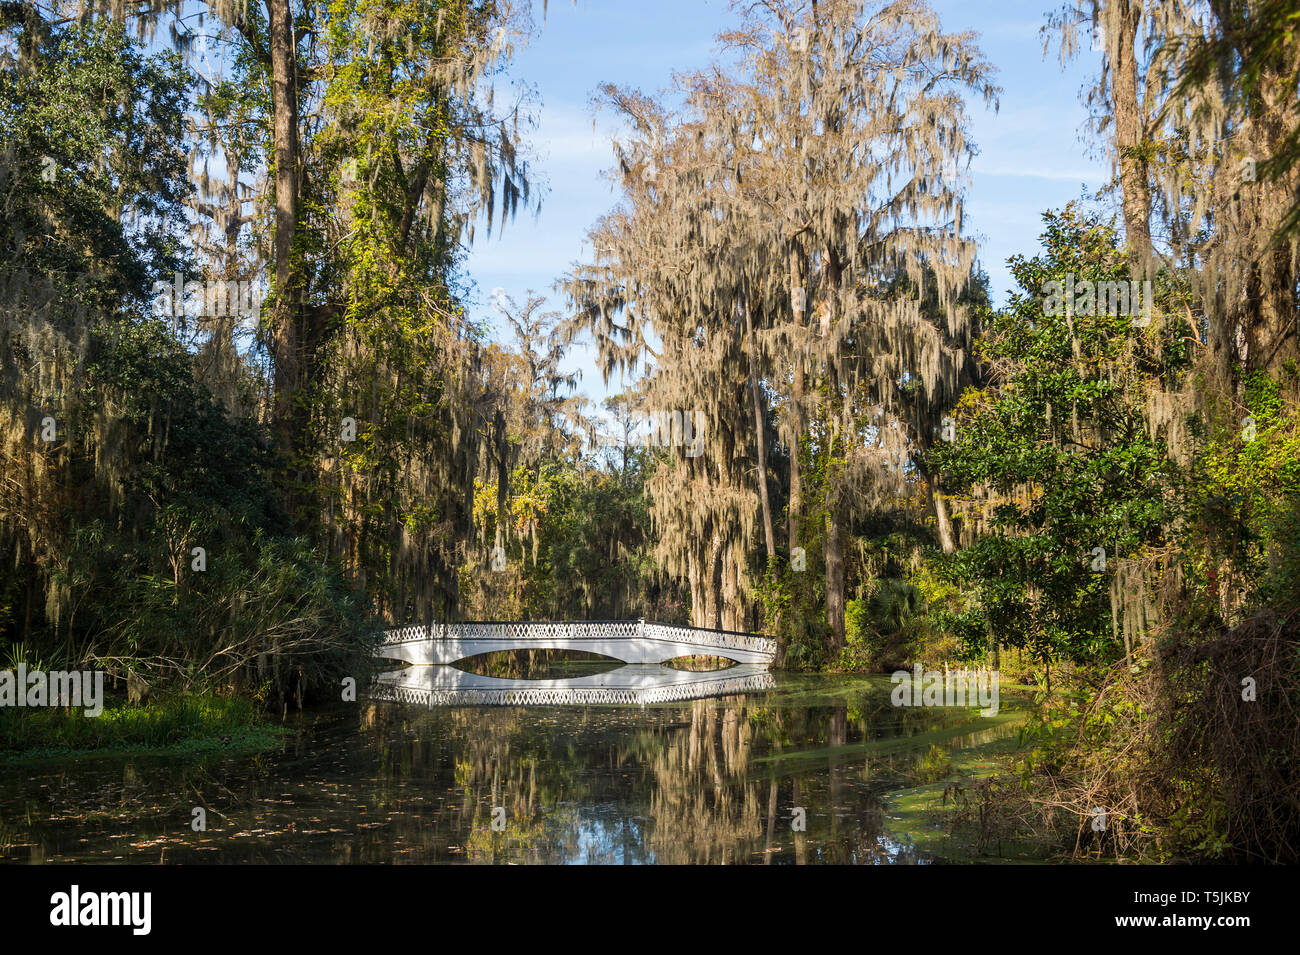 USA, South Carolina, Charleston, White bridge reflecting in a pond in the Magnolia Plantation Stock Photo